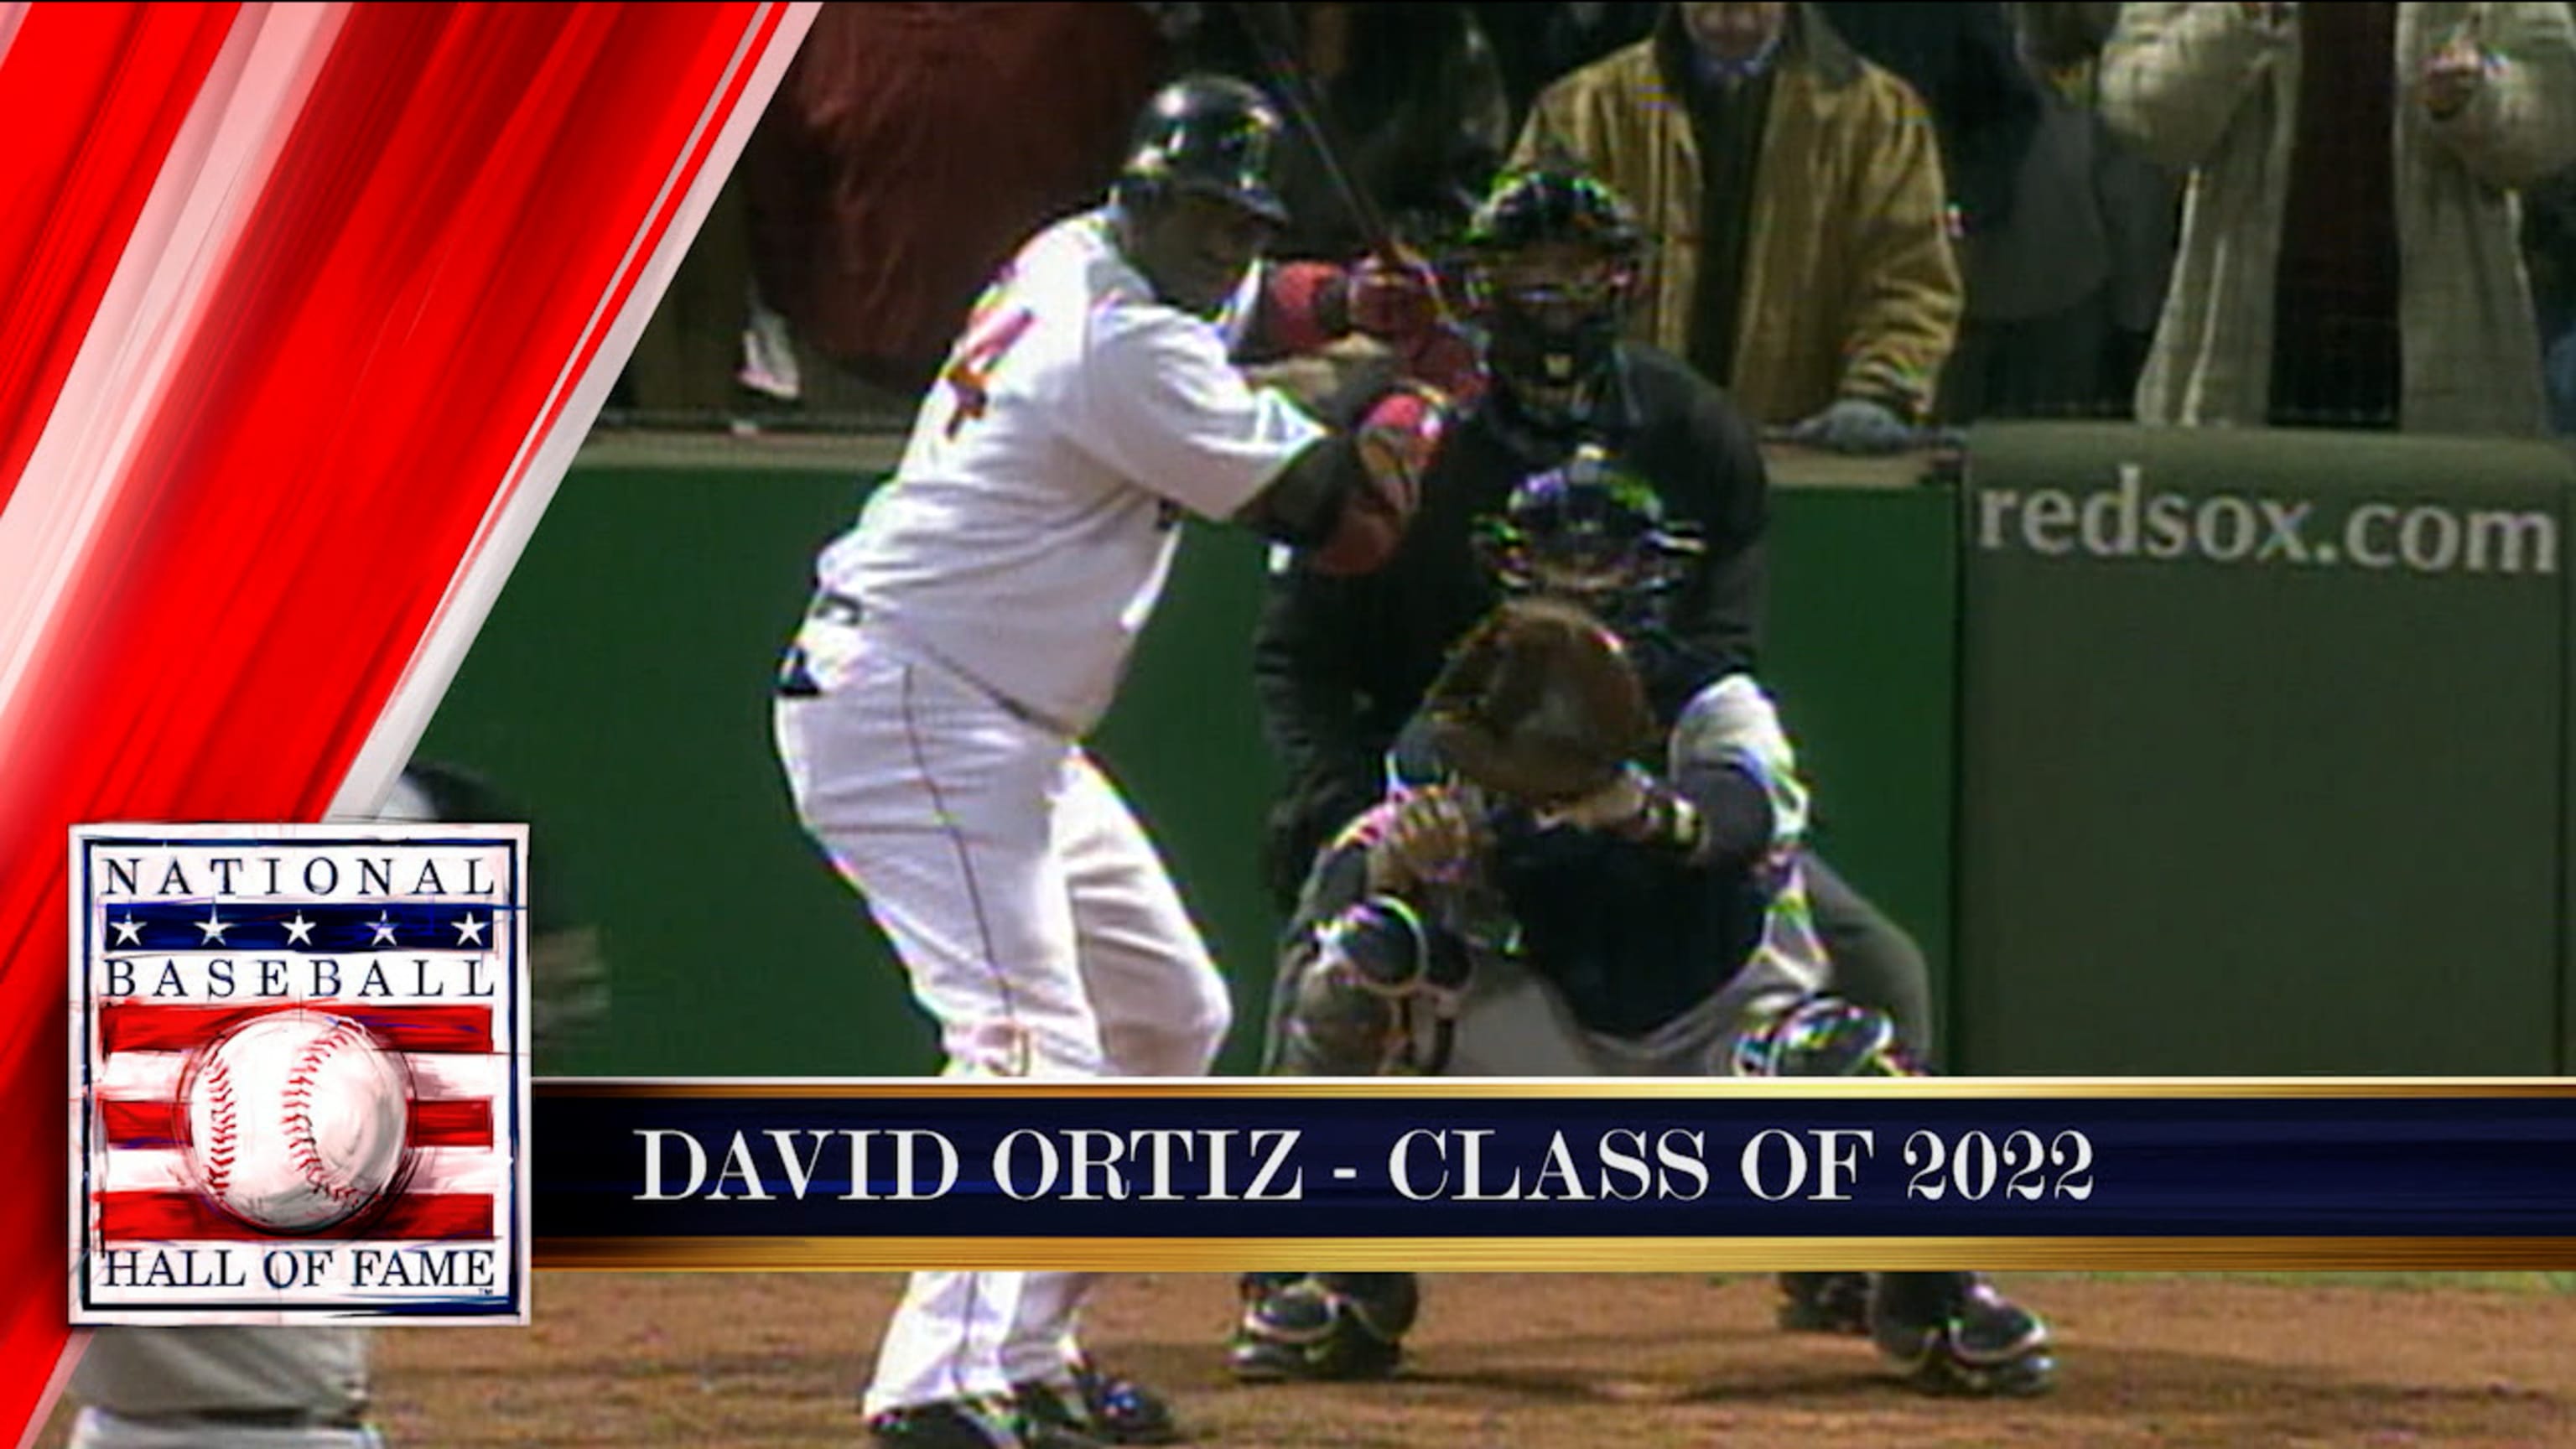 David Ortiz - MLB Designated hitter - News, Stats, Bio and more